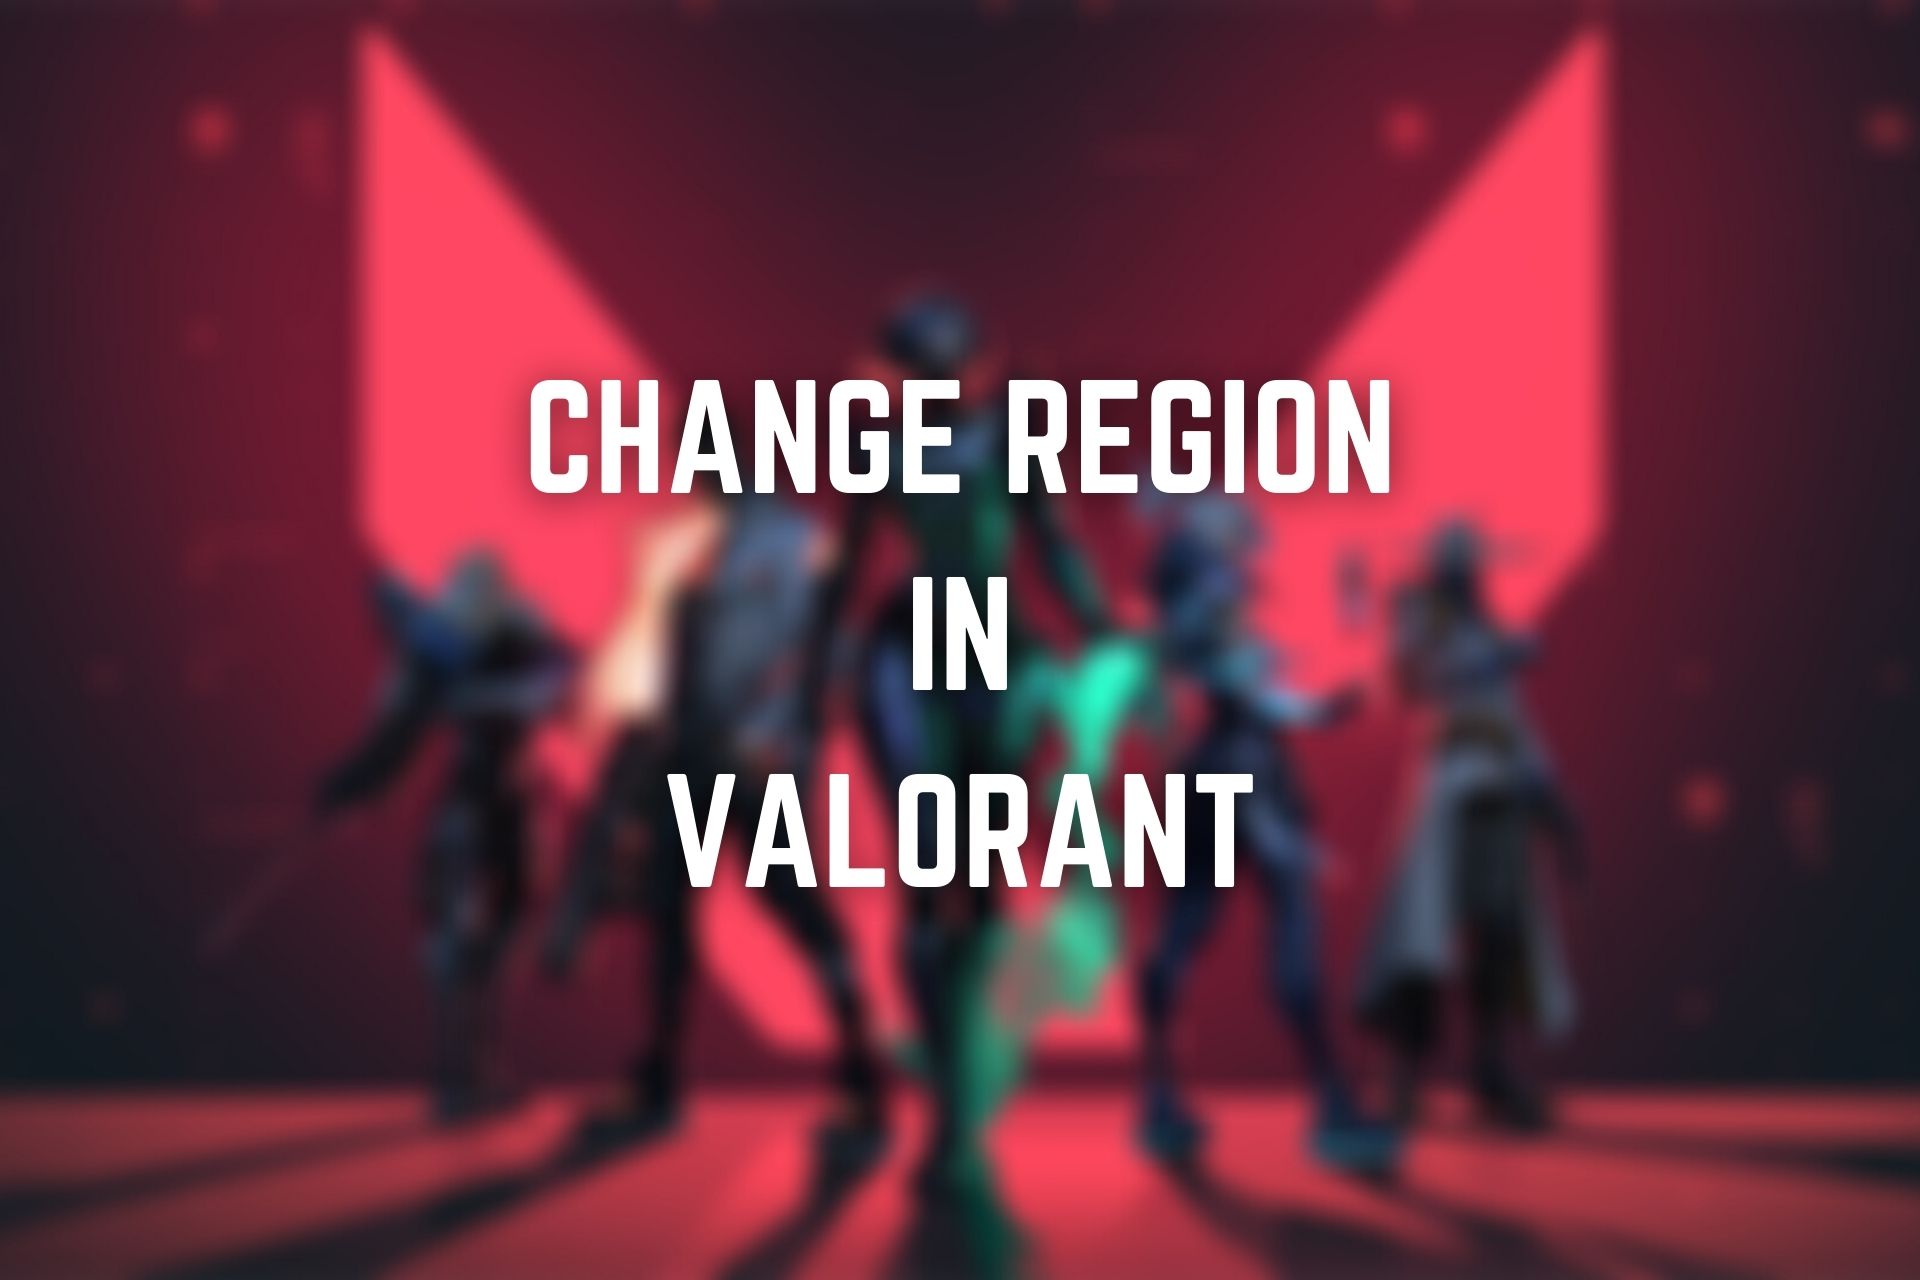 How to Change Valorant Region? - AstrillVPN Blog